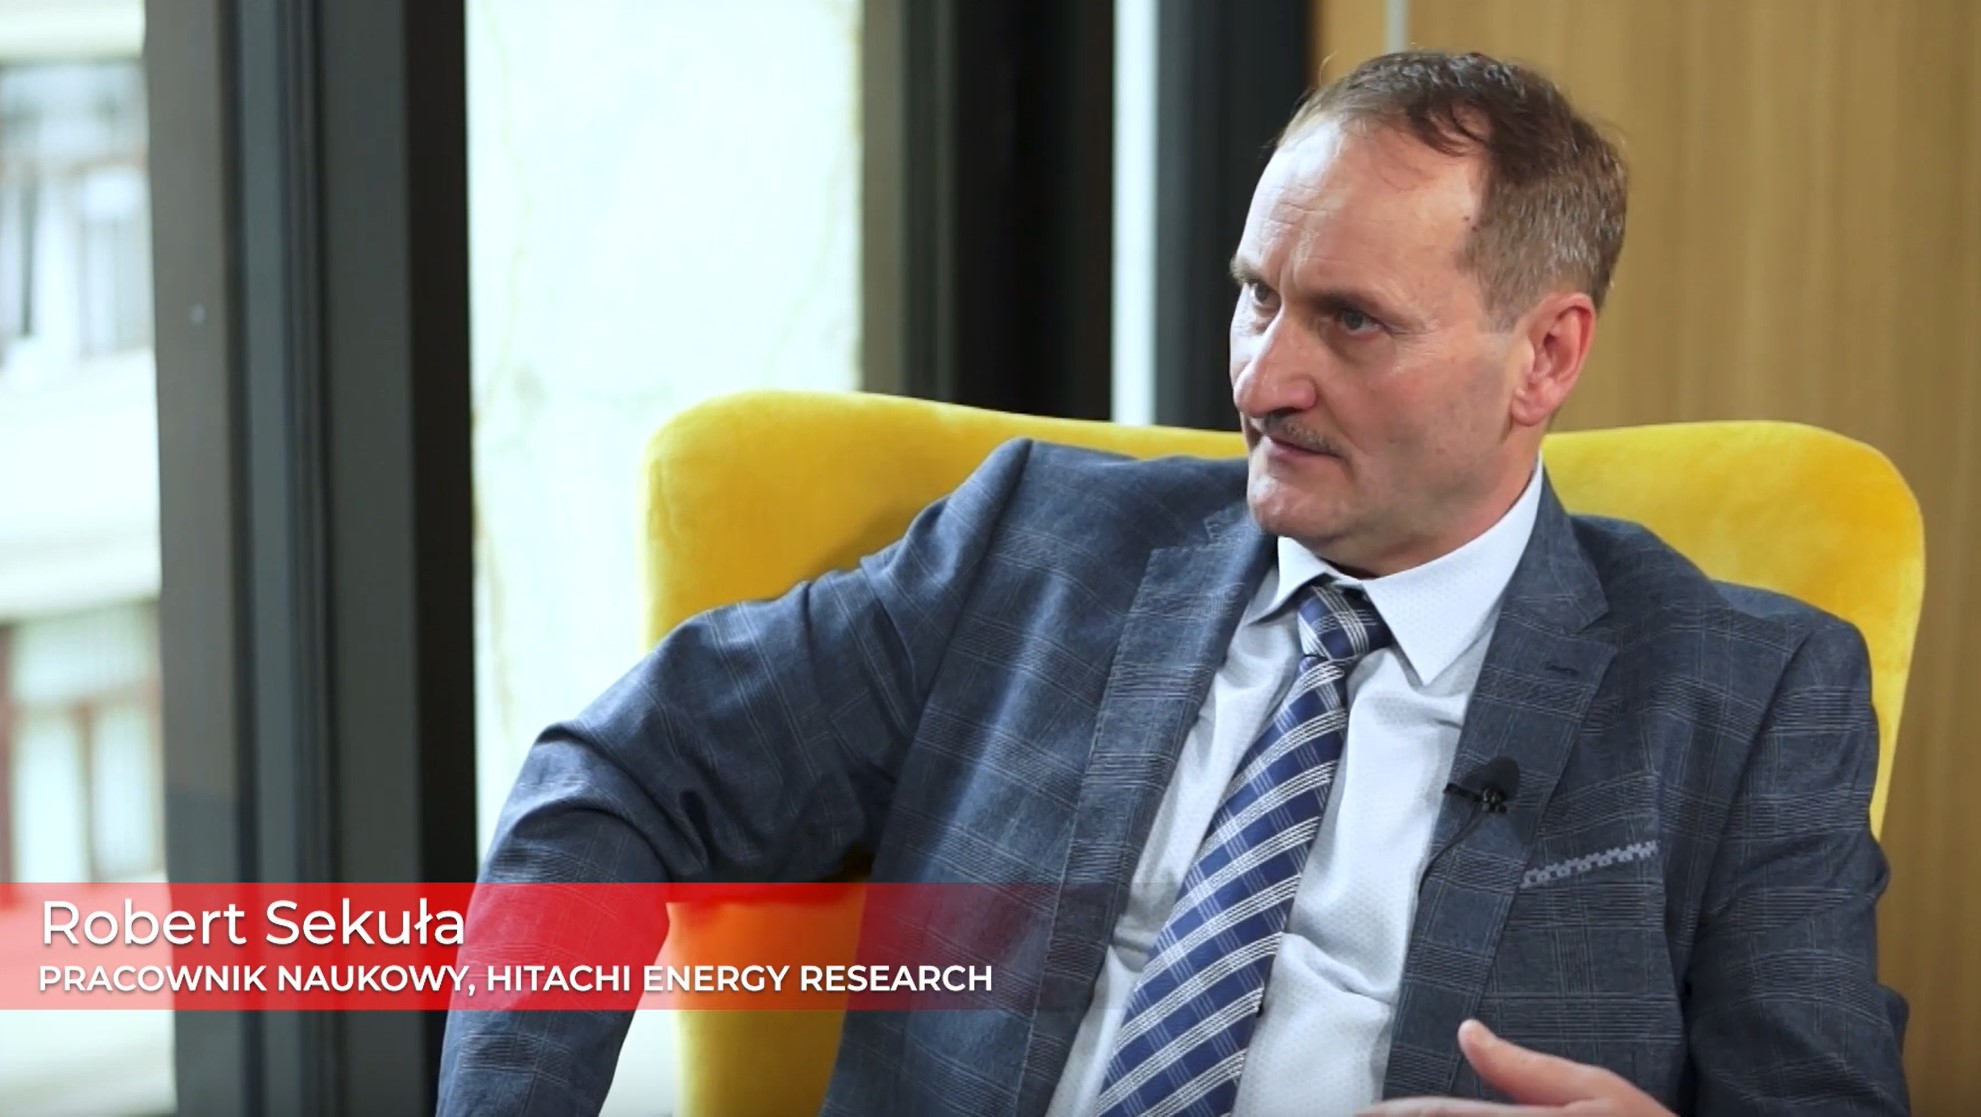 Robert Sekuła, pracownik naukowy Hitachy Energy Research. Fot. BiznesAlert.pl